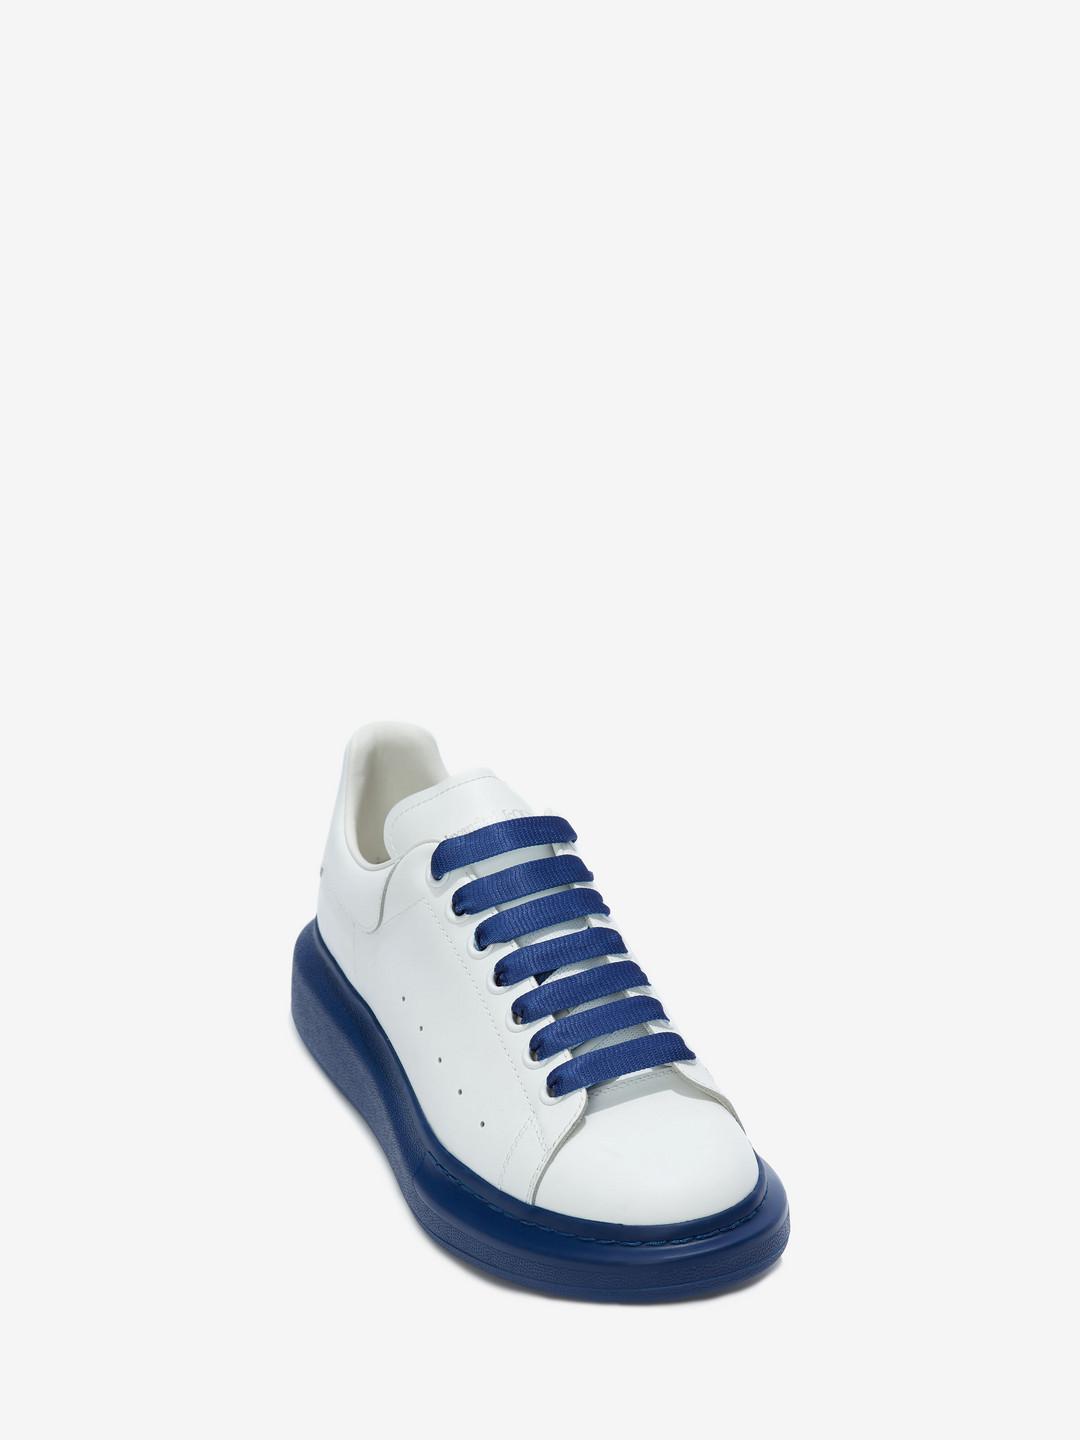 Oversized Sneaker in White/Paris Blue